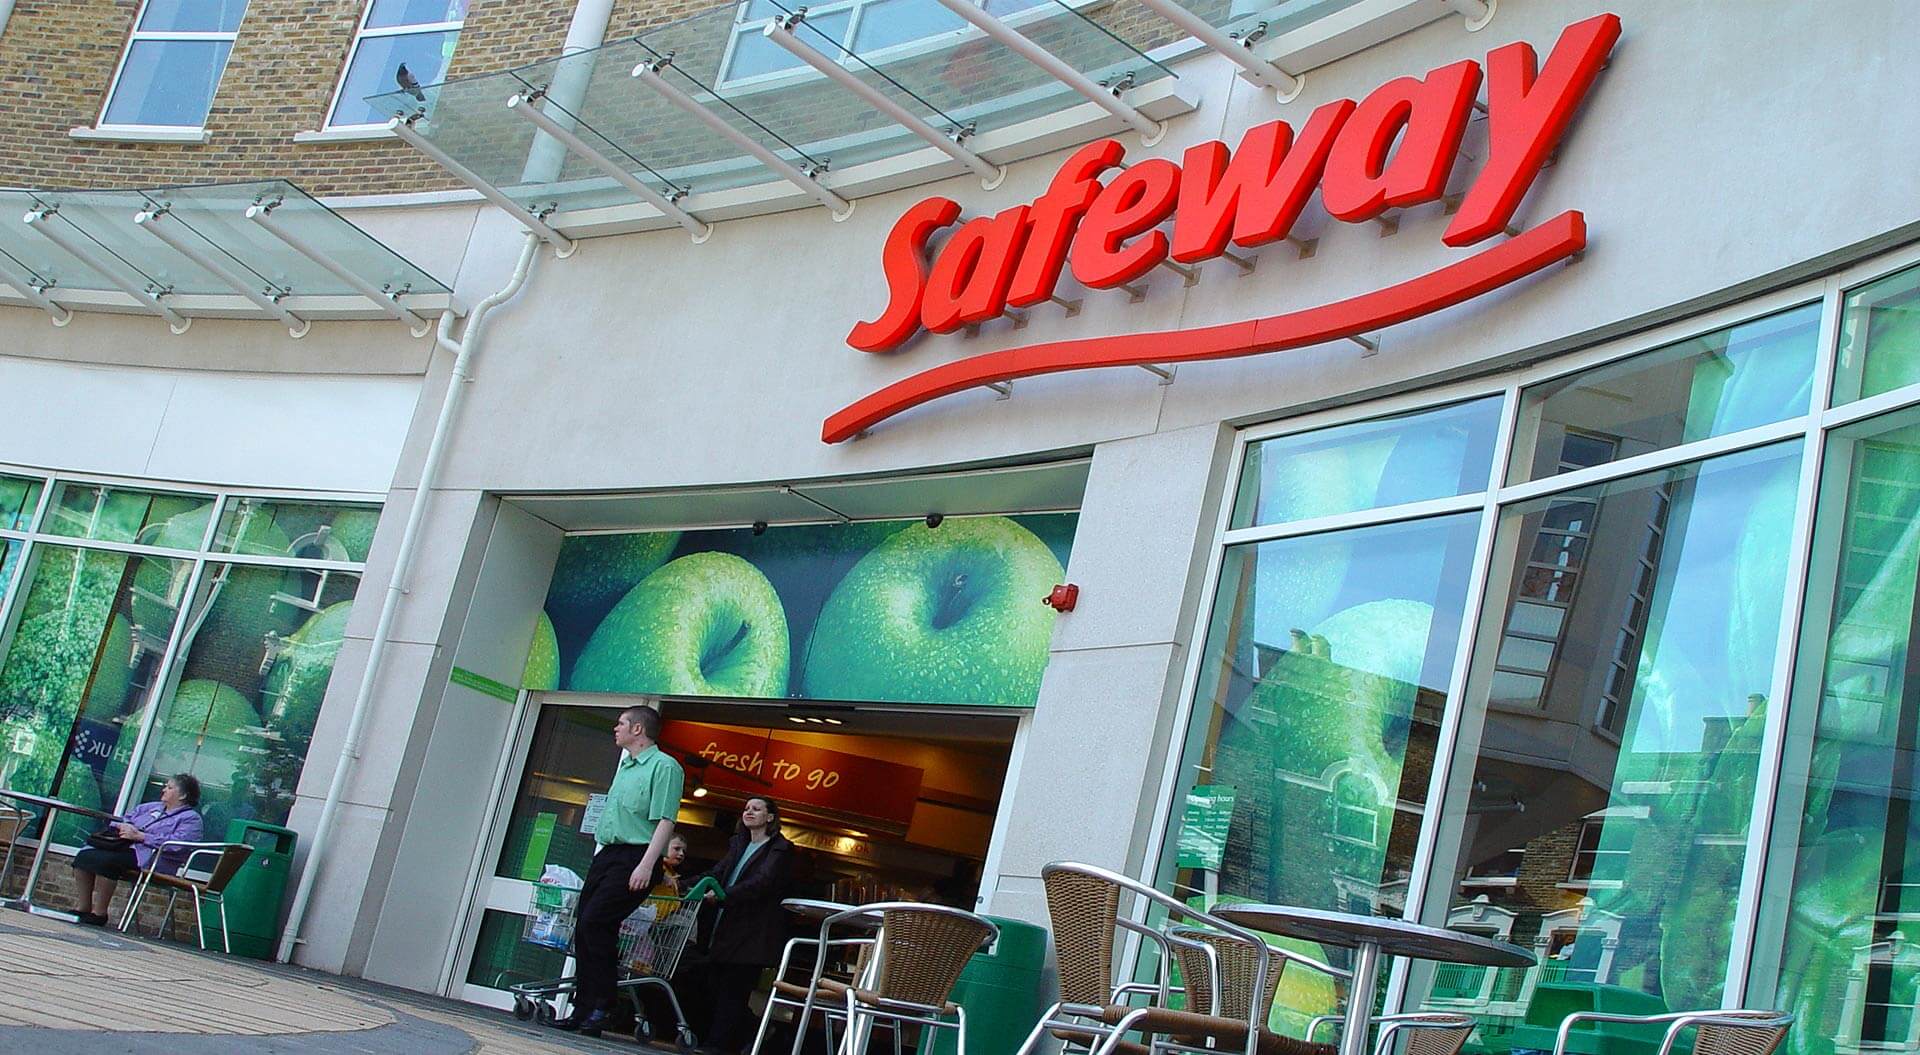 Entrance to Safeway supermarket store design and external branding